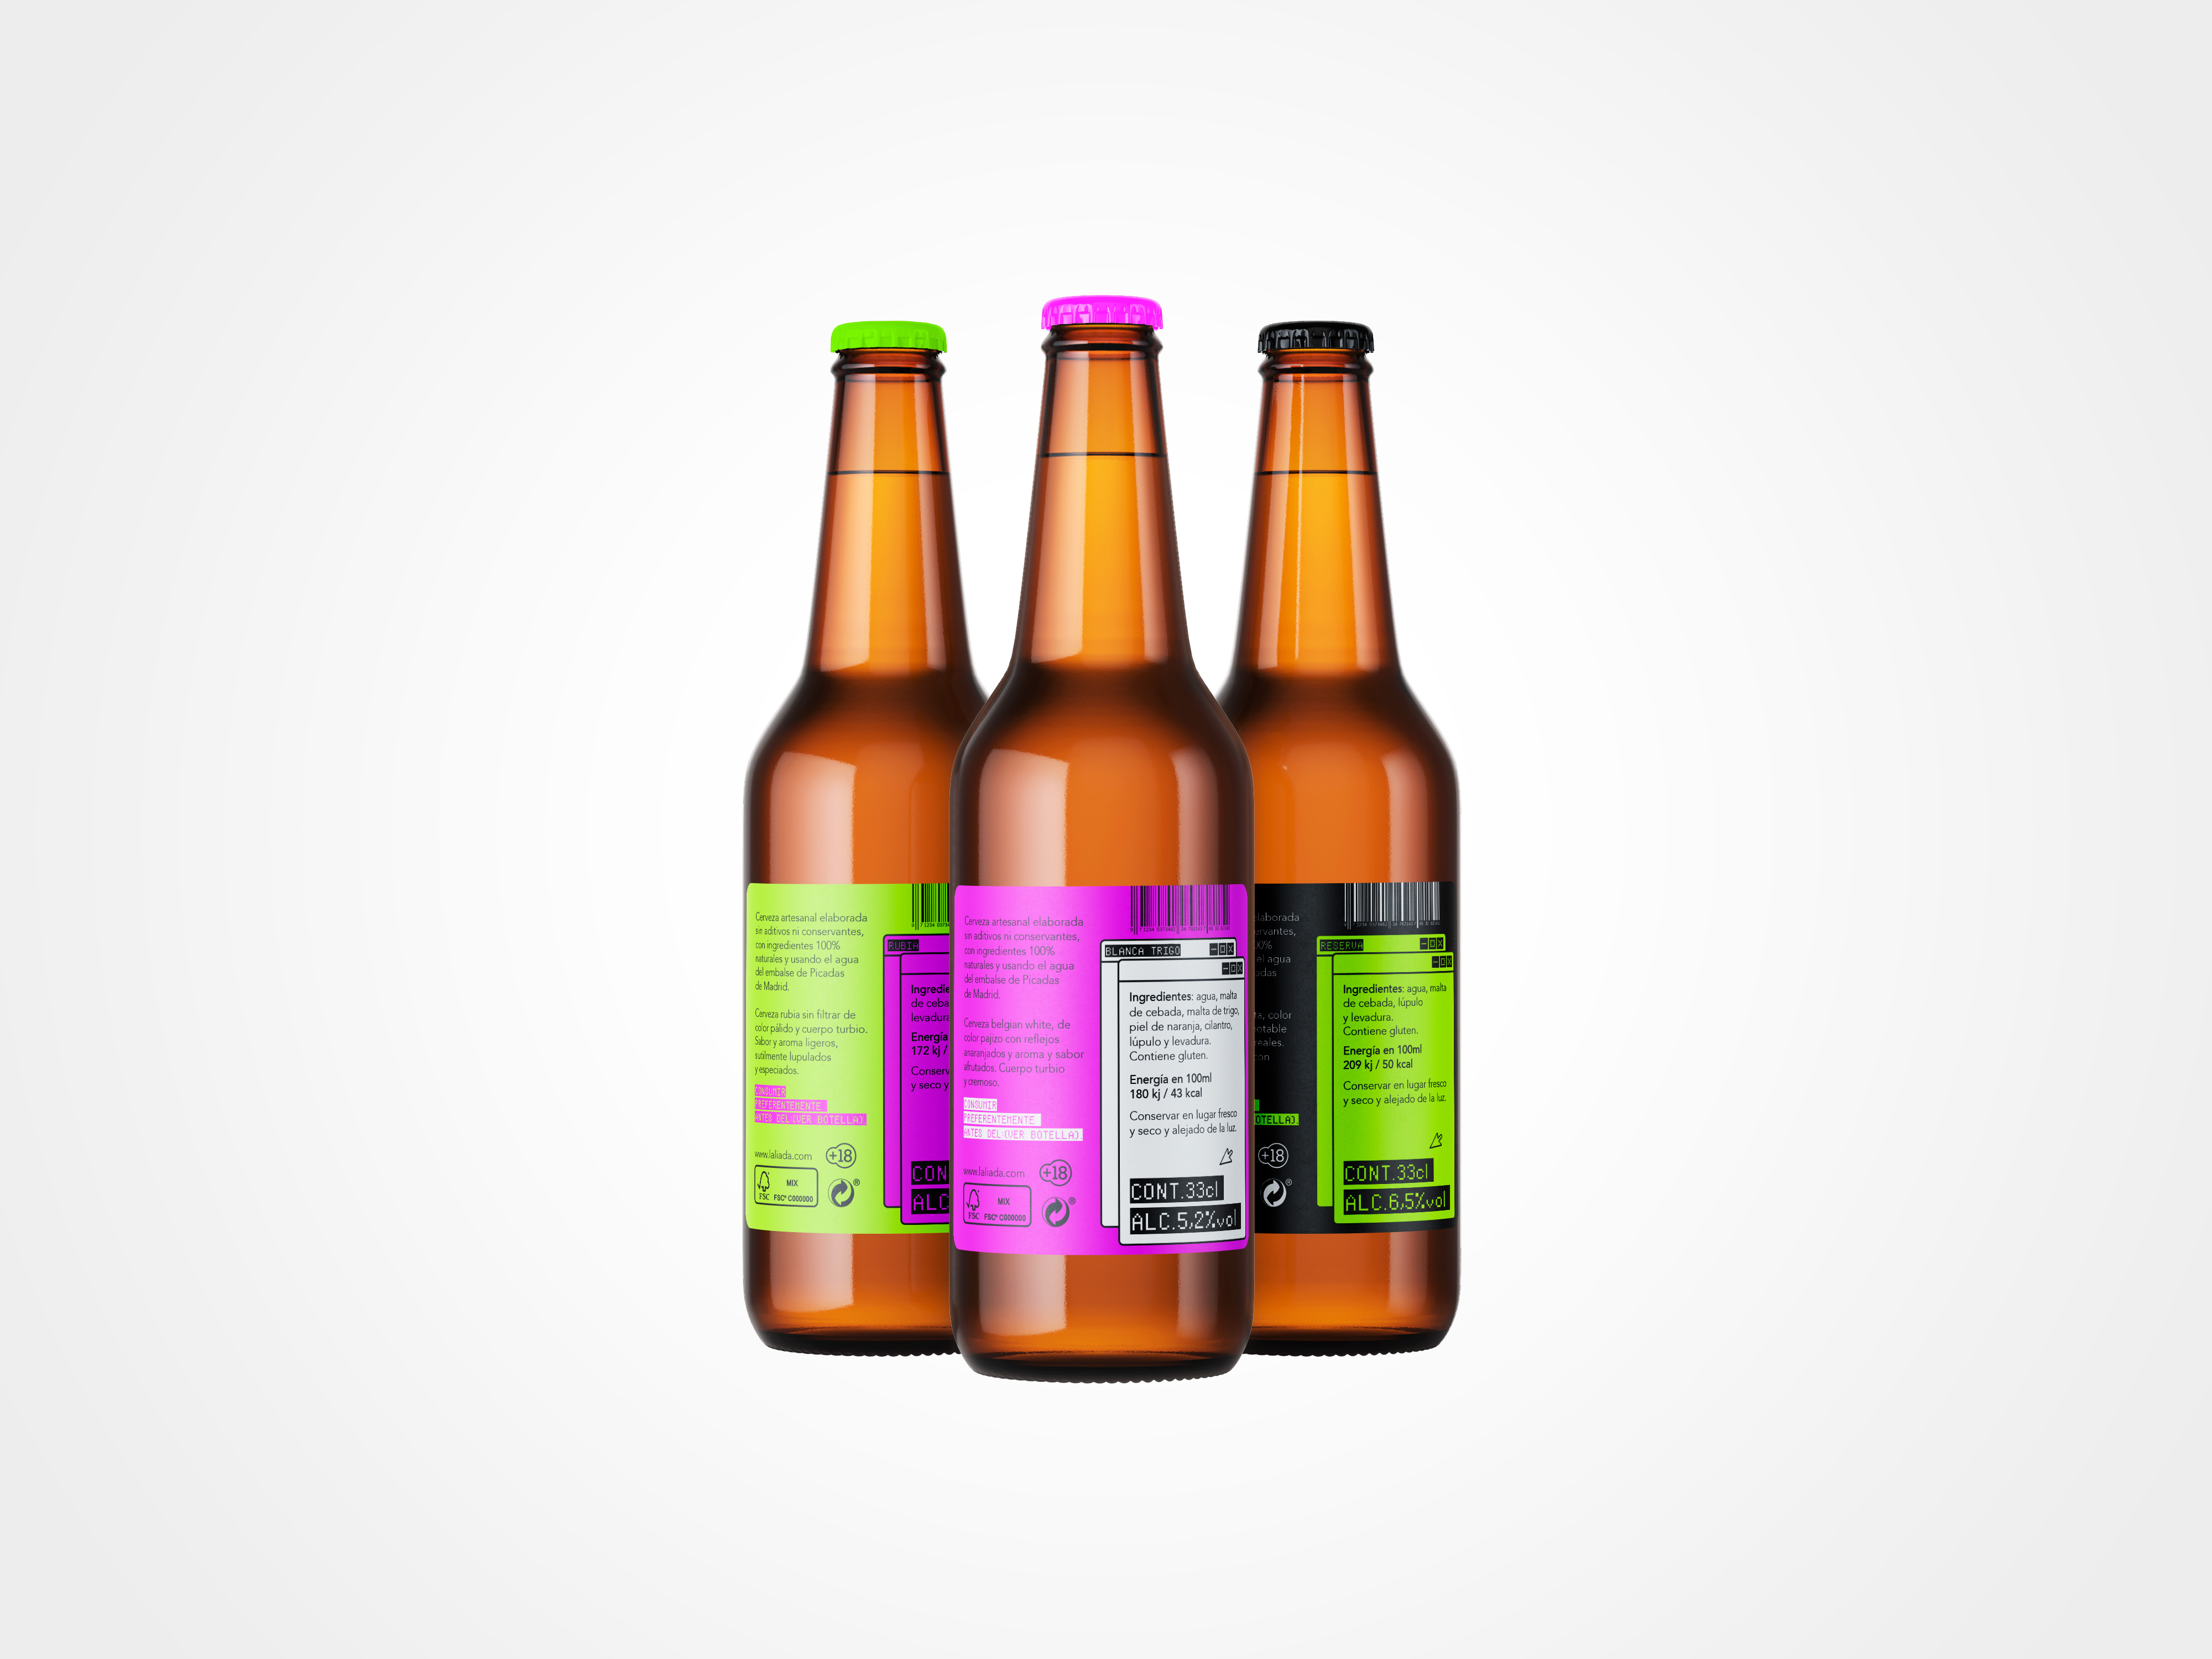 'LA LIADA' packaging cerveza by Jimena - Creative Work - $i